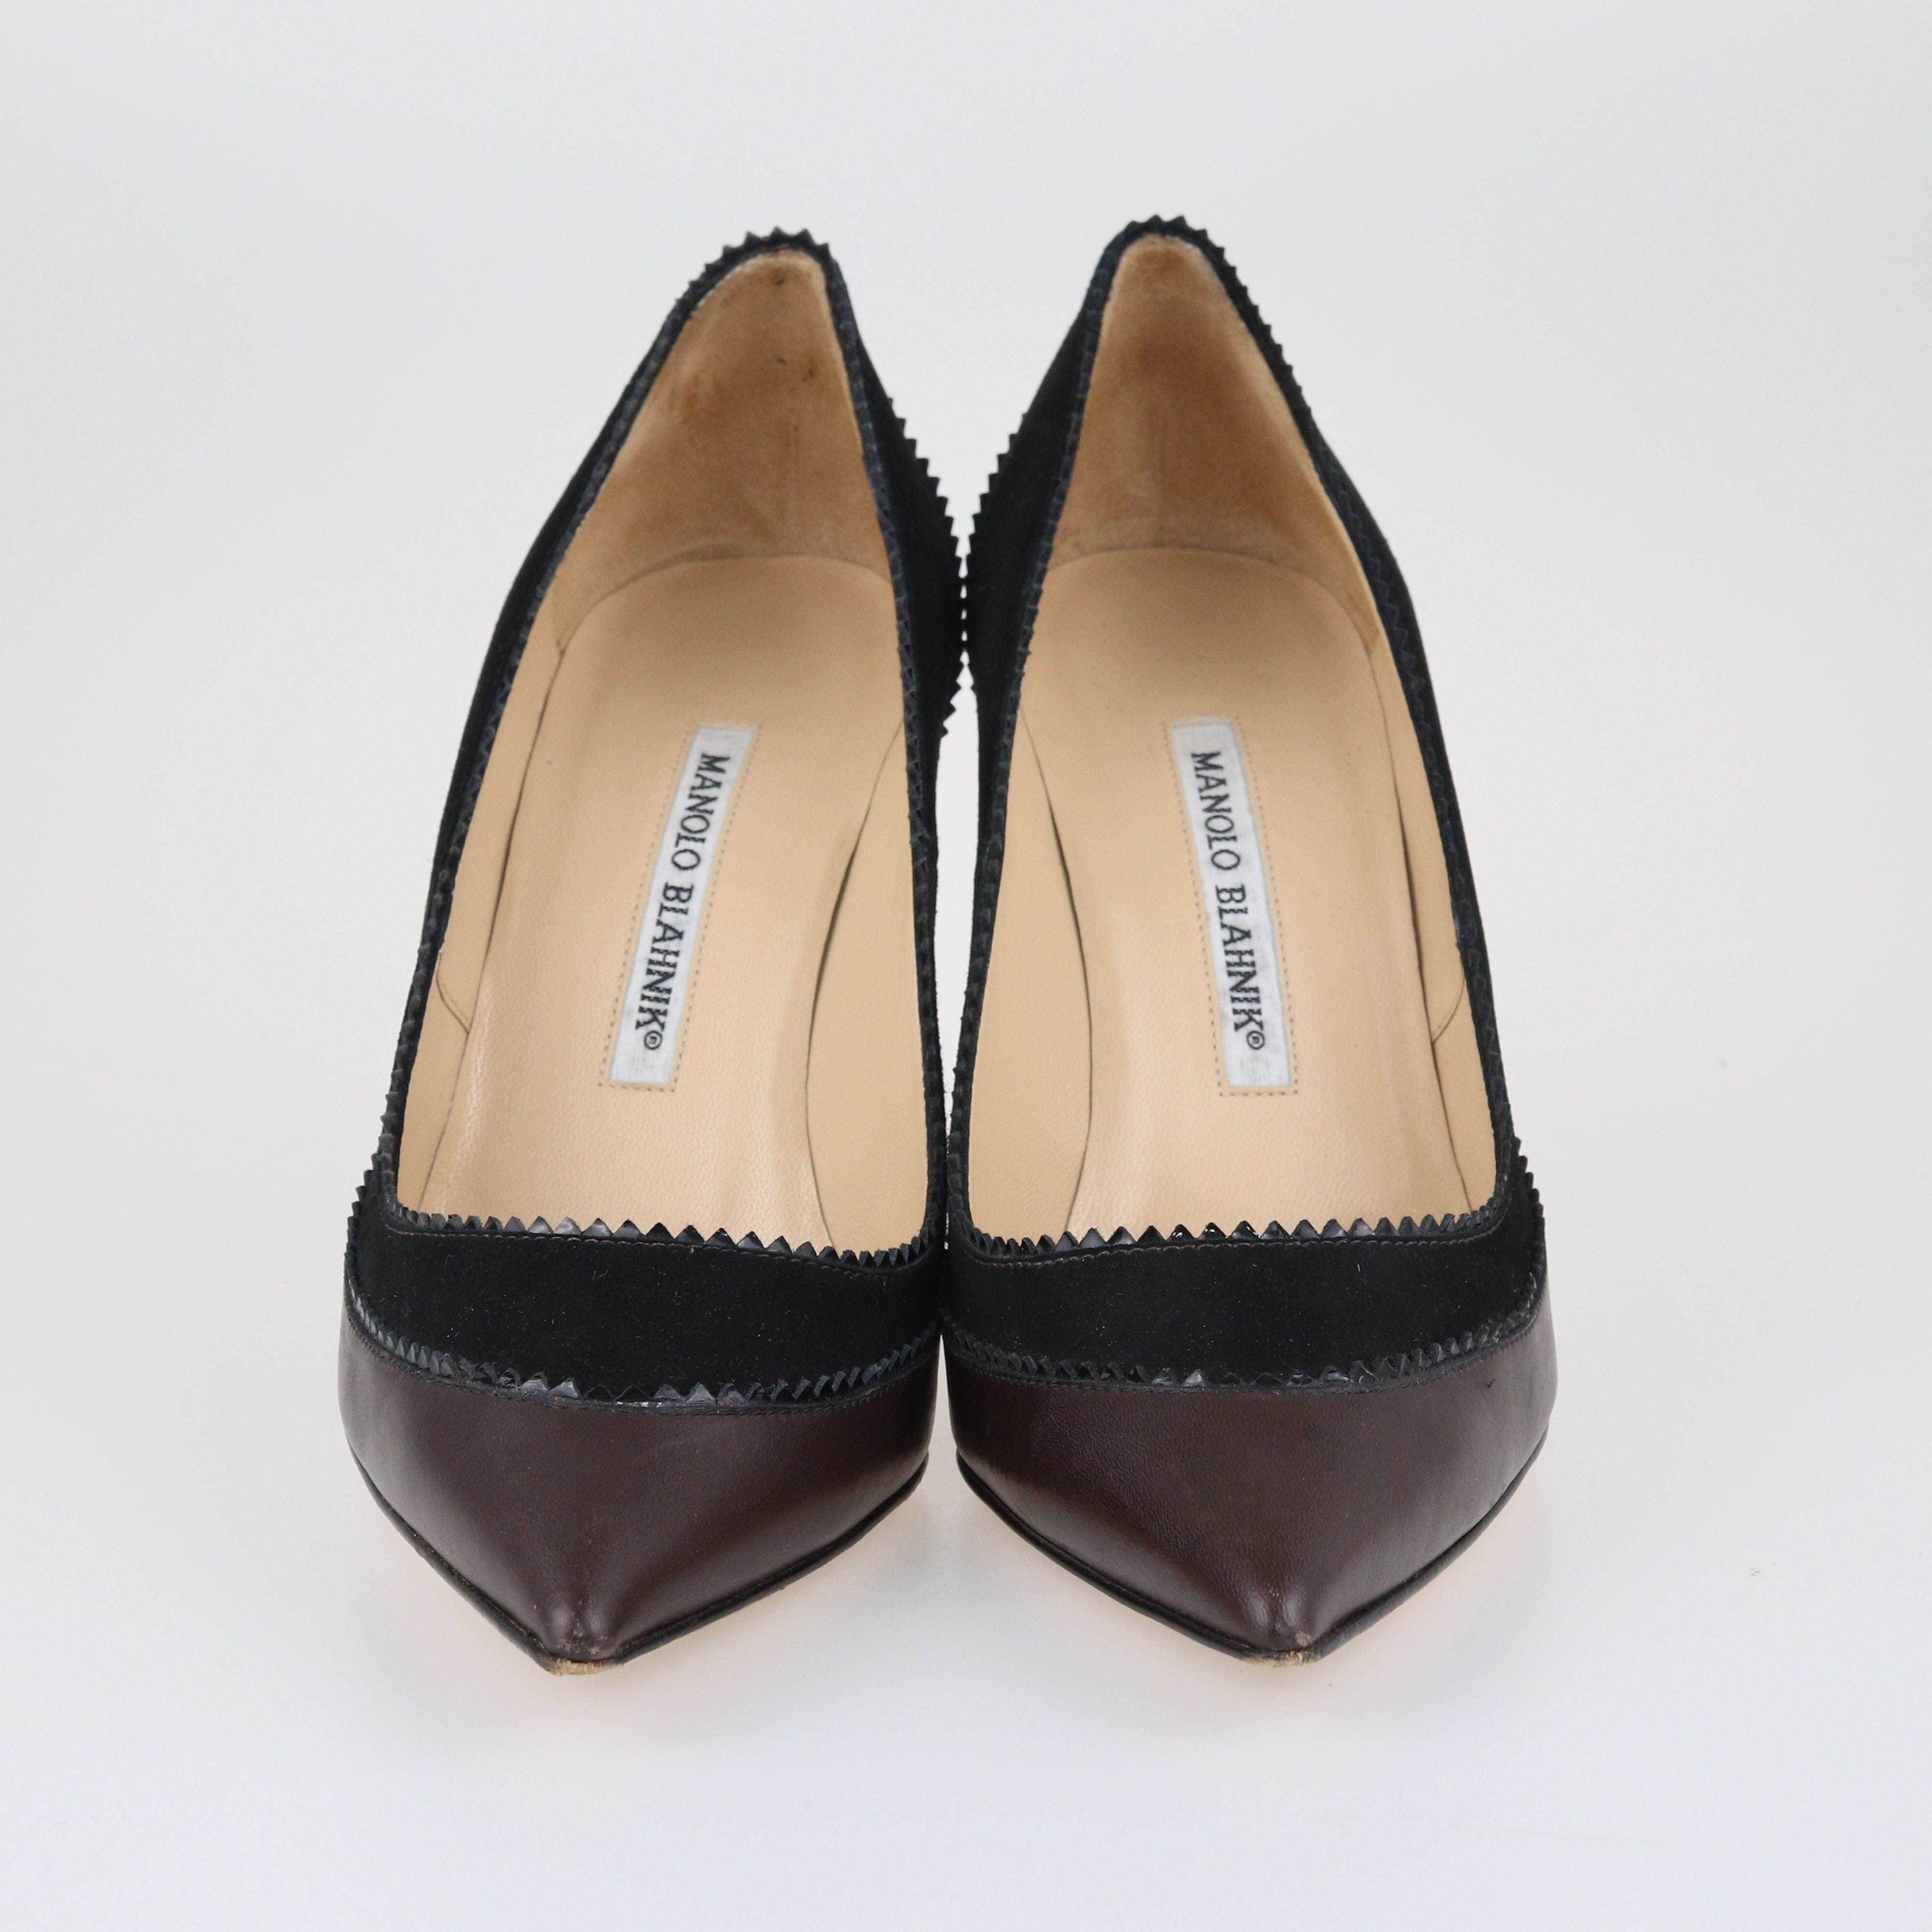 Black/Brown Pointed Toe Pumps Shoes Manolo Blahnik 